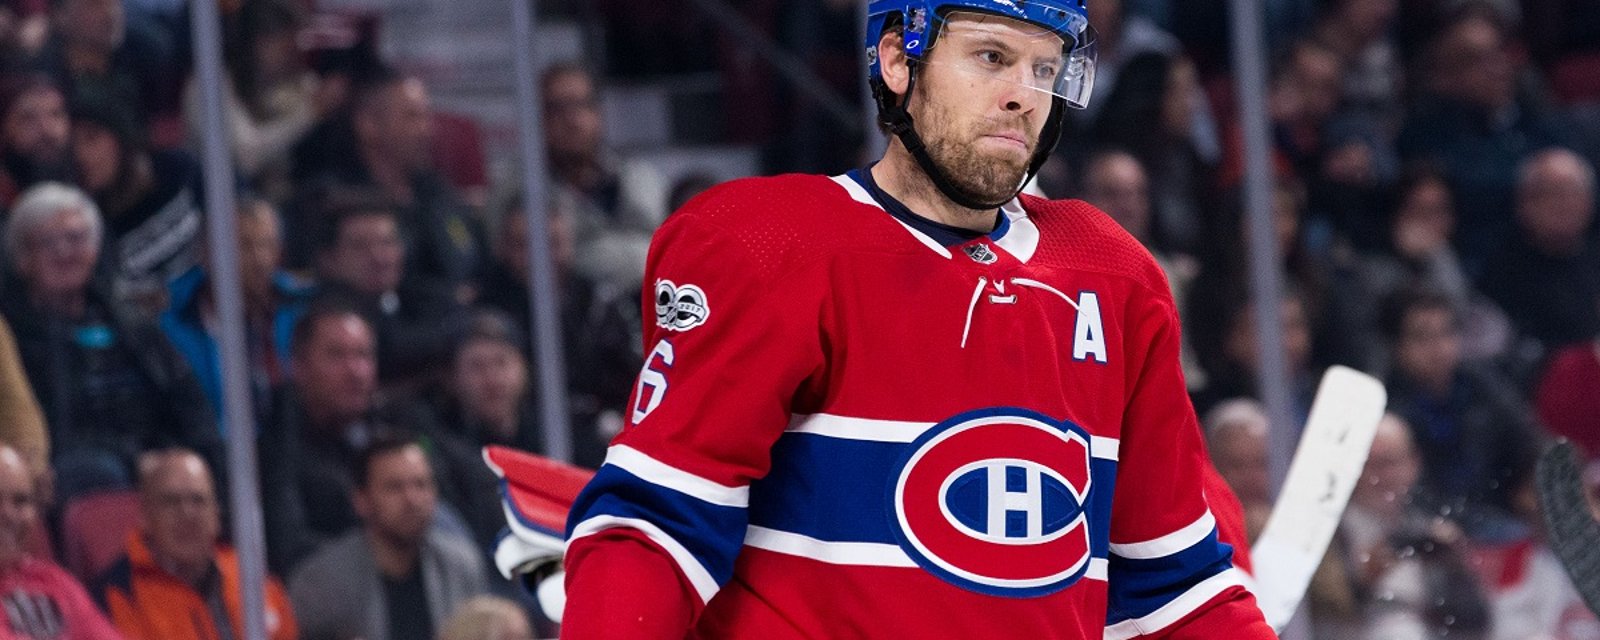 NHL GM admits he tried “very hard” to acquire Shea Weber.